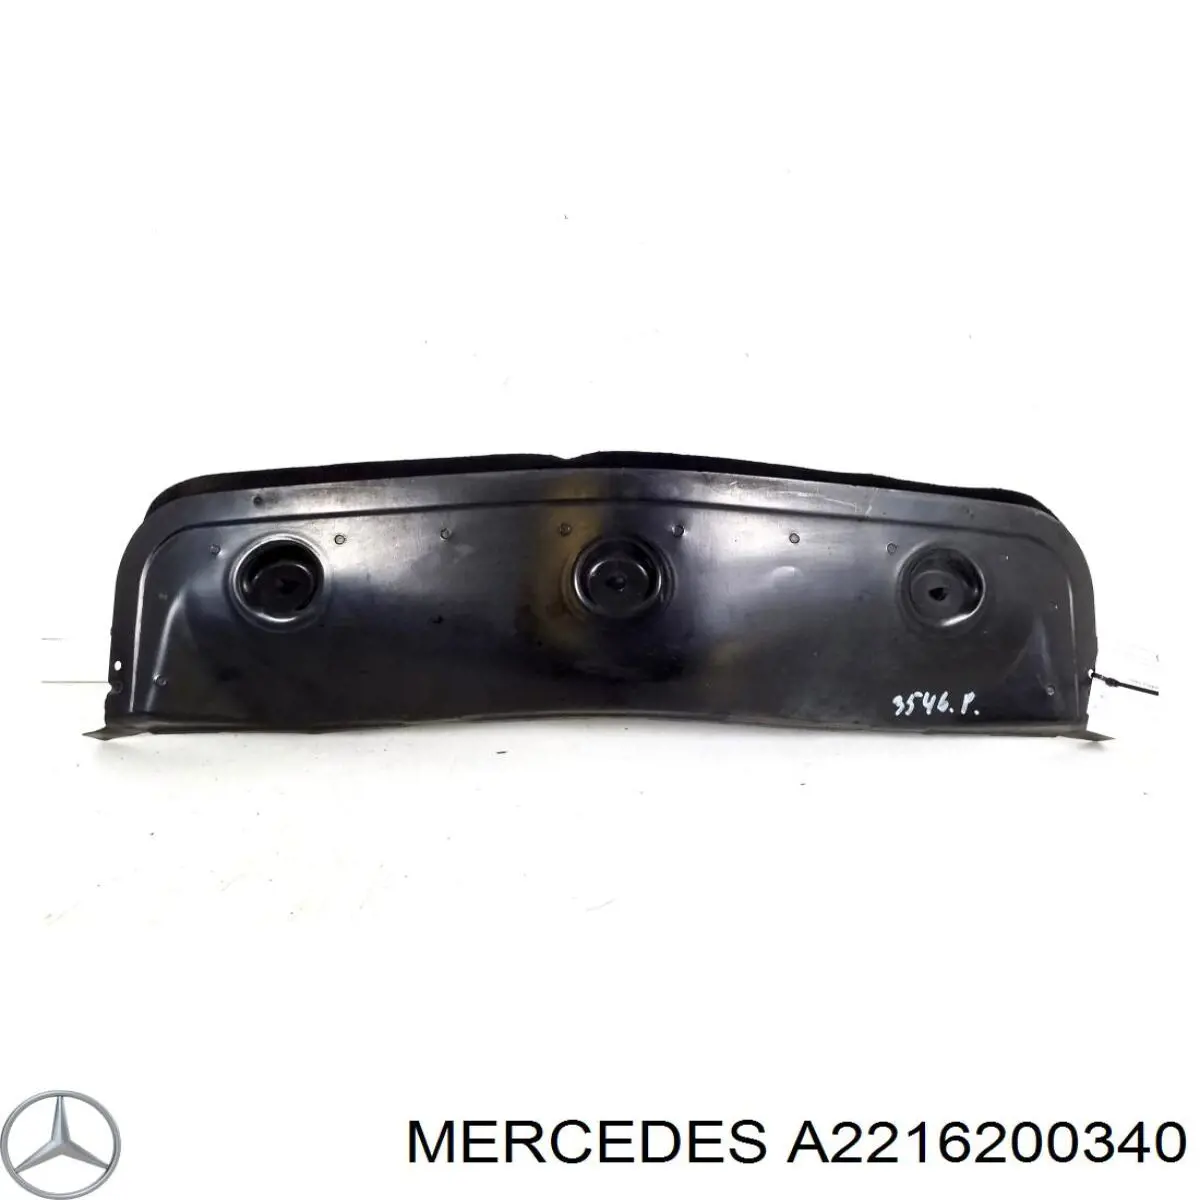 A2216200340 Mercedes